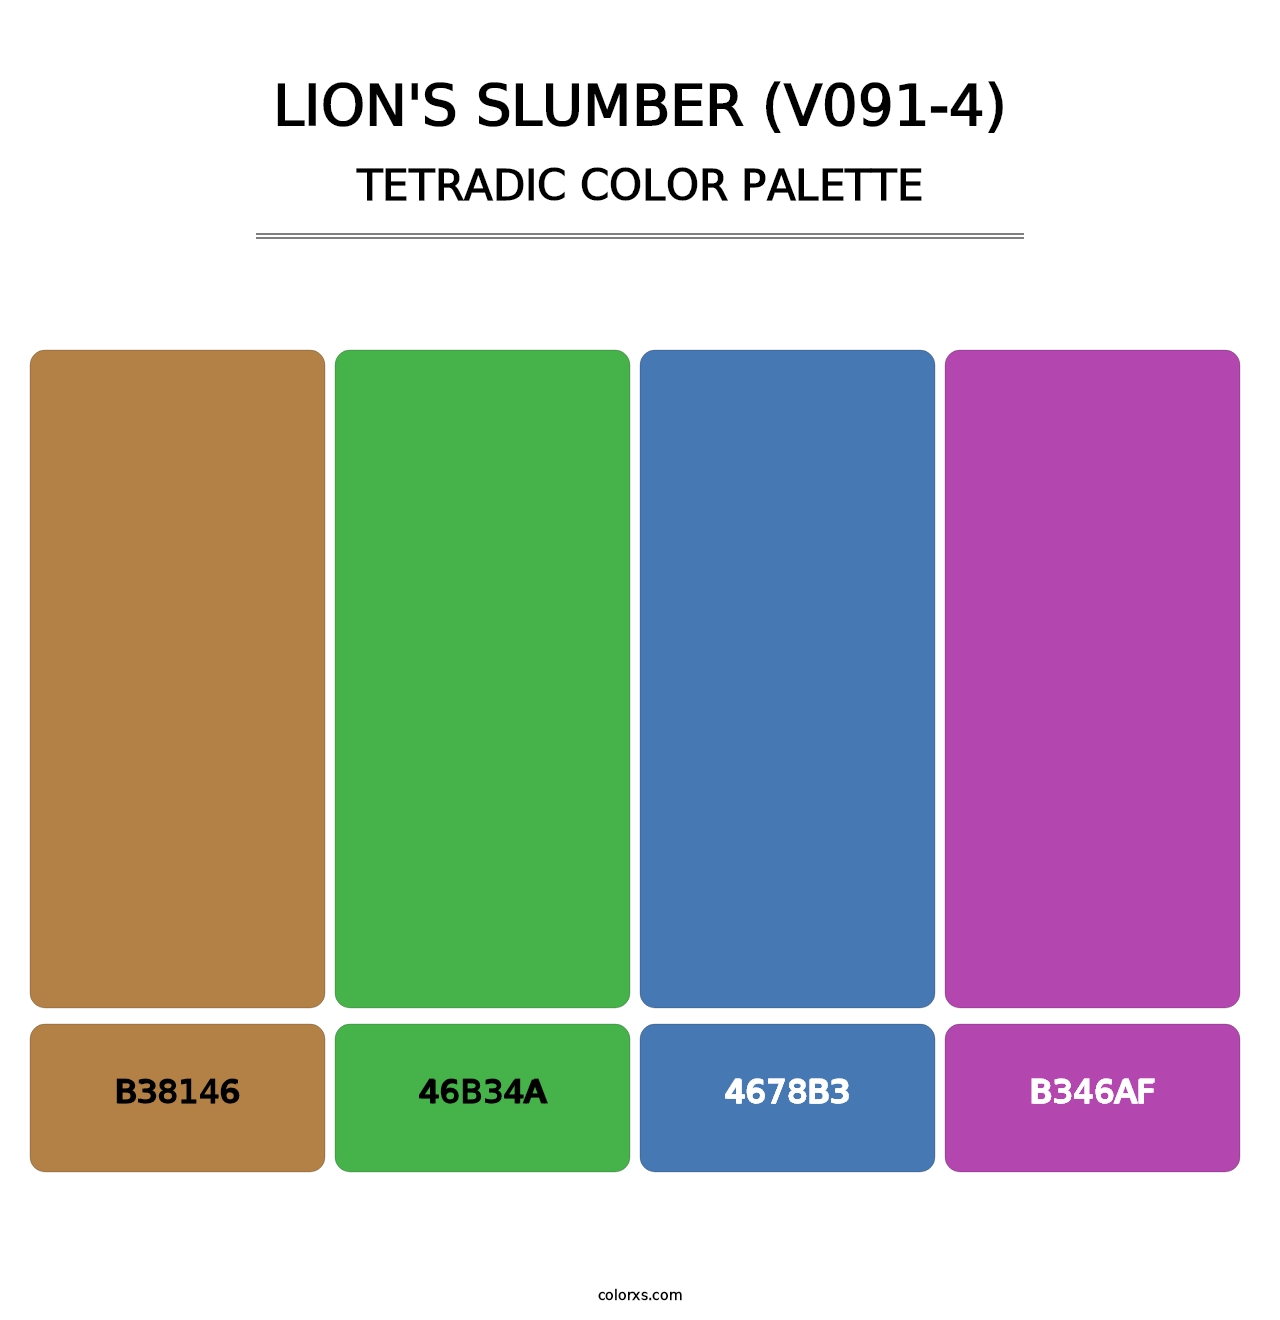 Lion's Slumber (V091-4) - Tetradic Color Palette